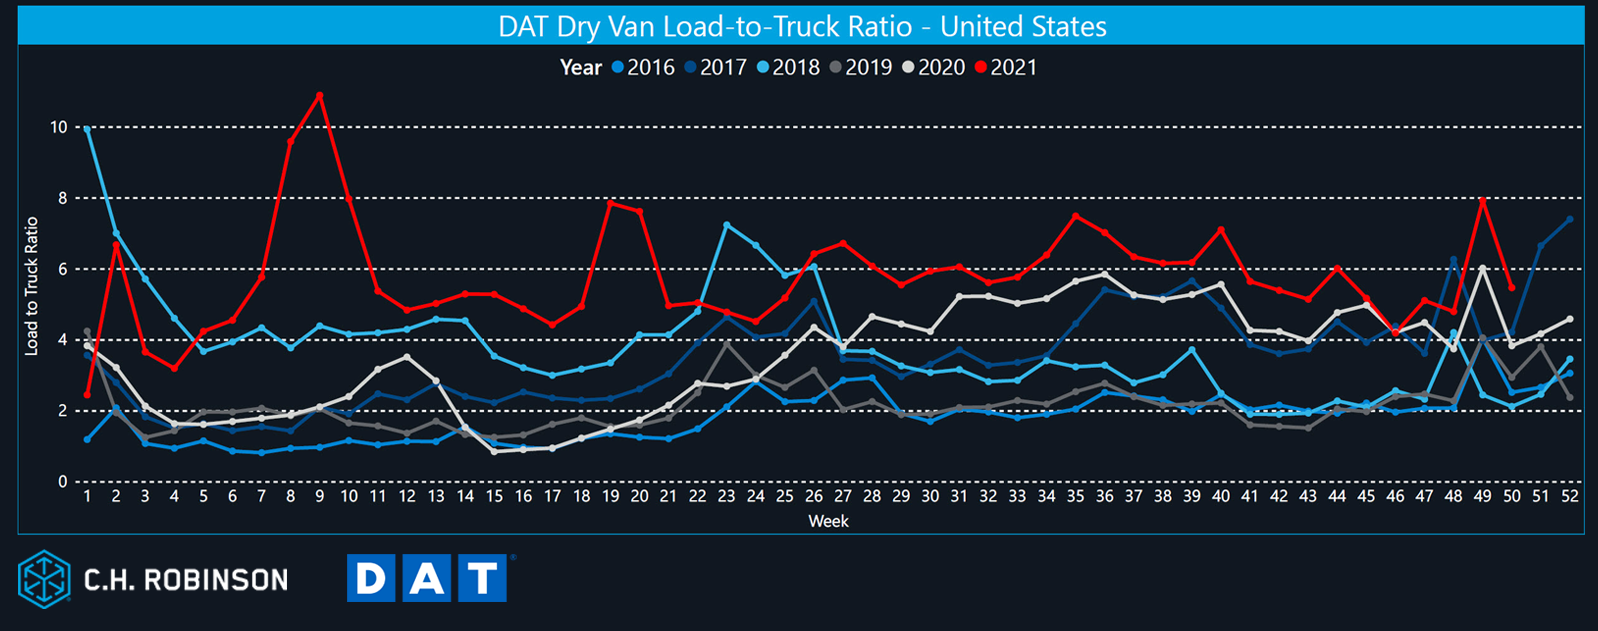 DAT dry van load to truck ratio | C.H. Robinson Market Insights November 2021